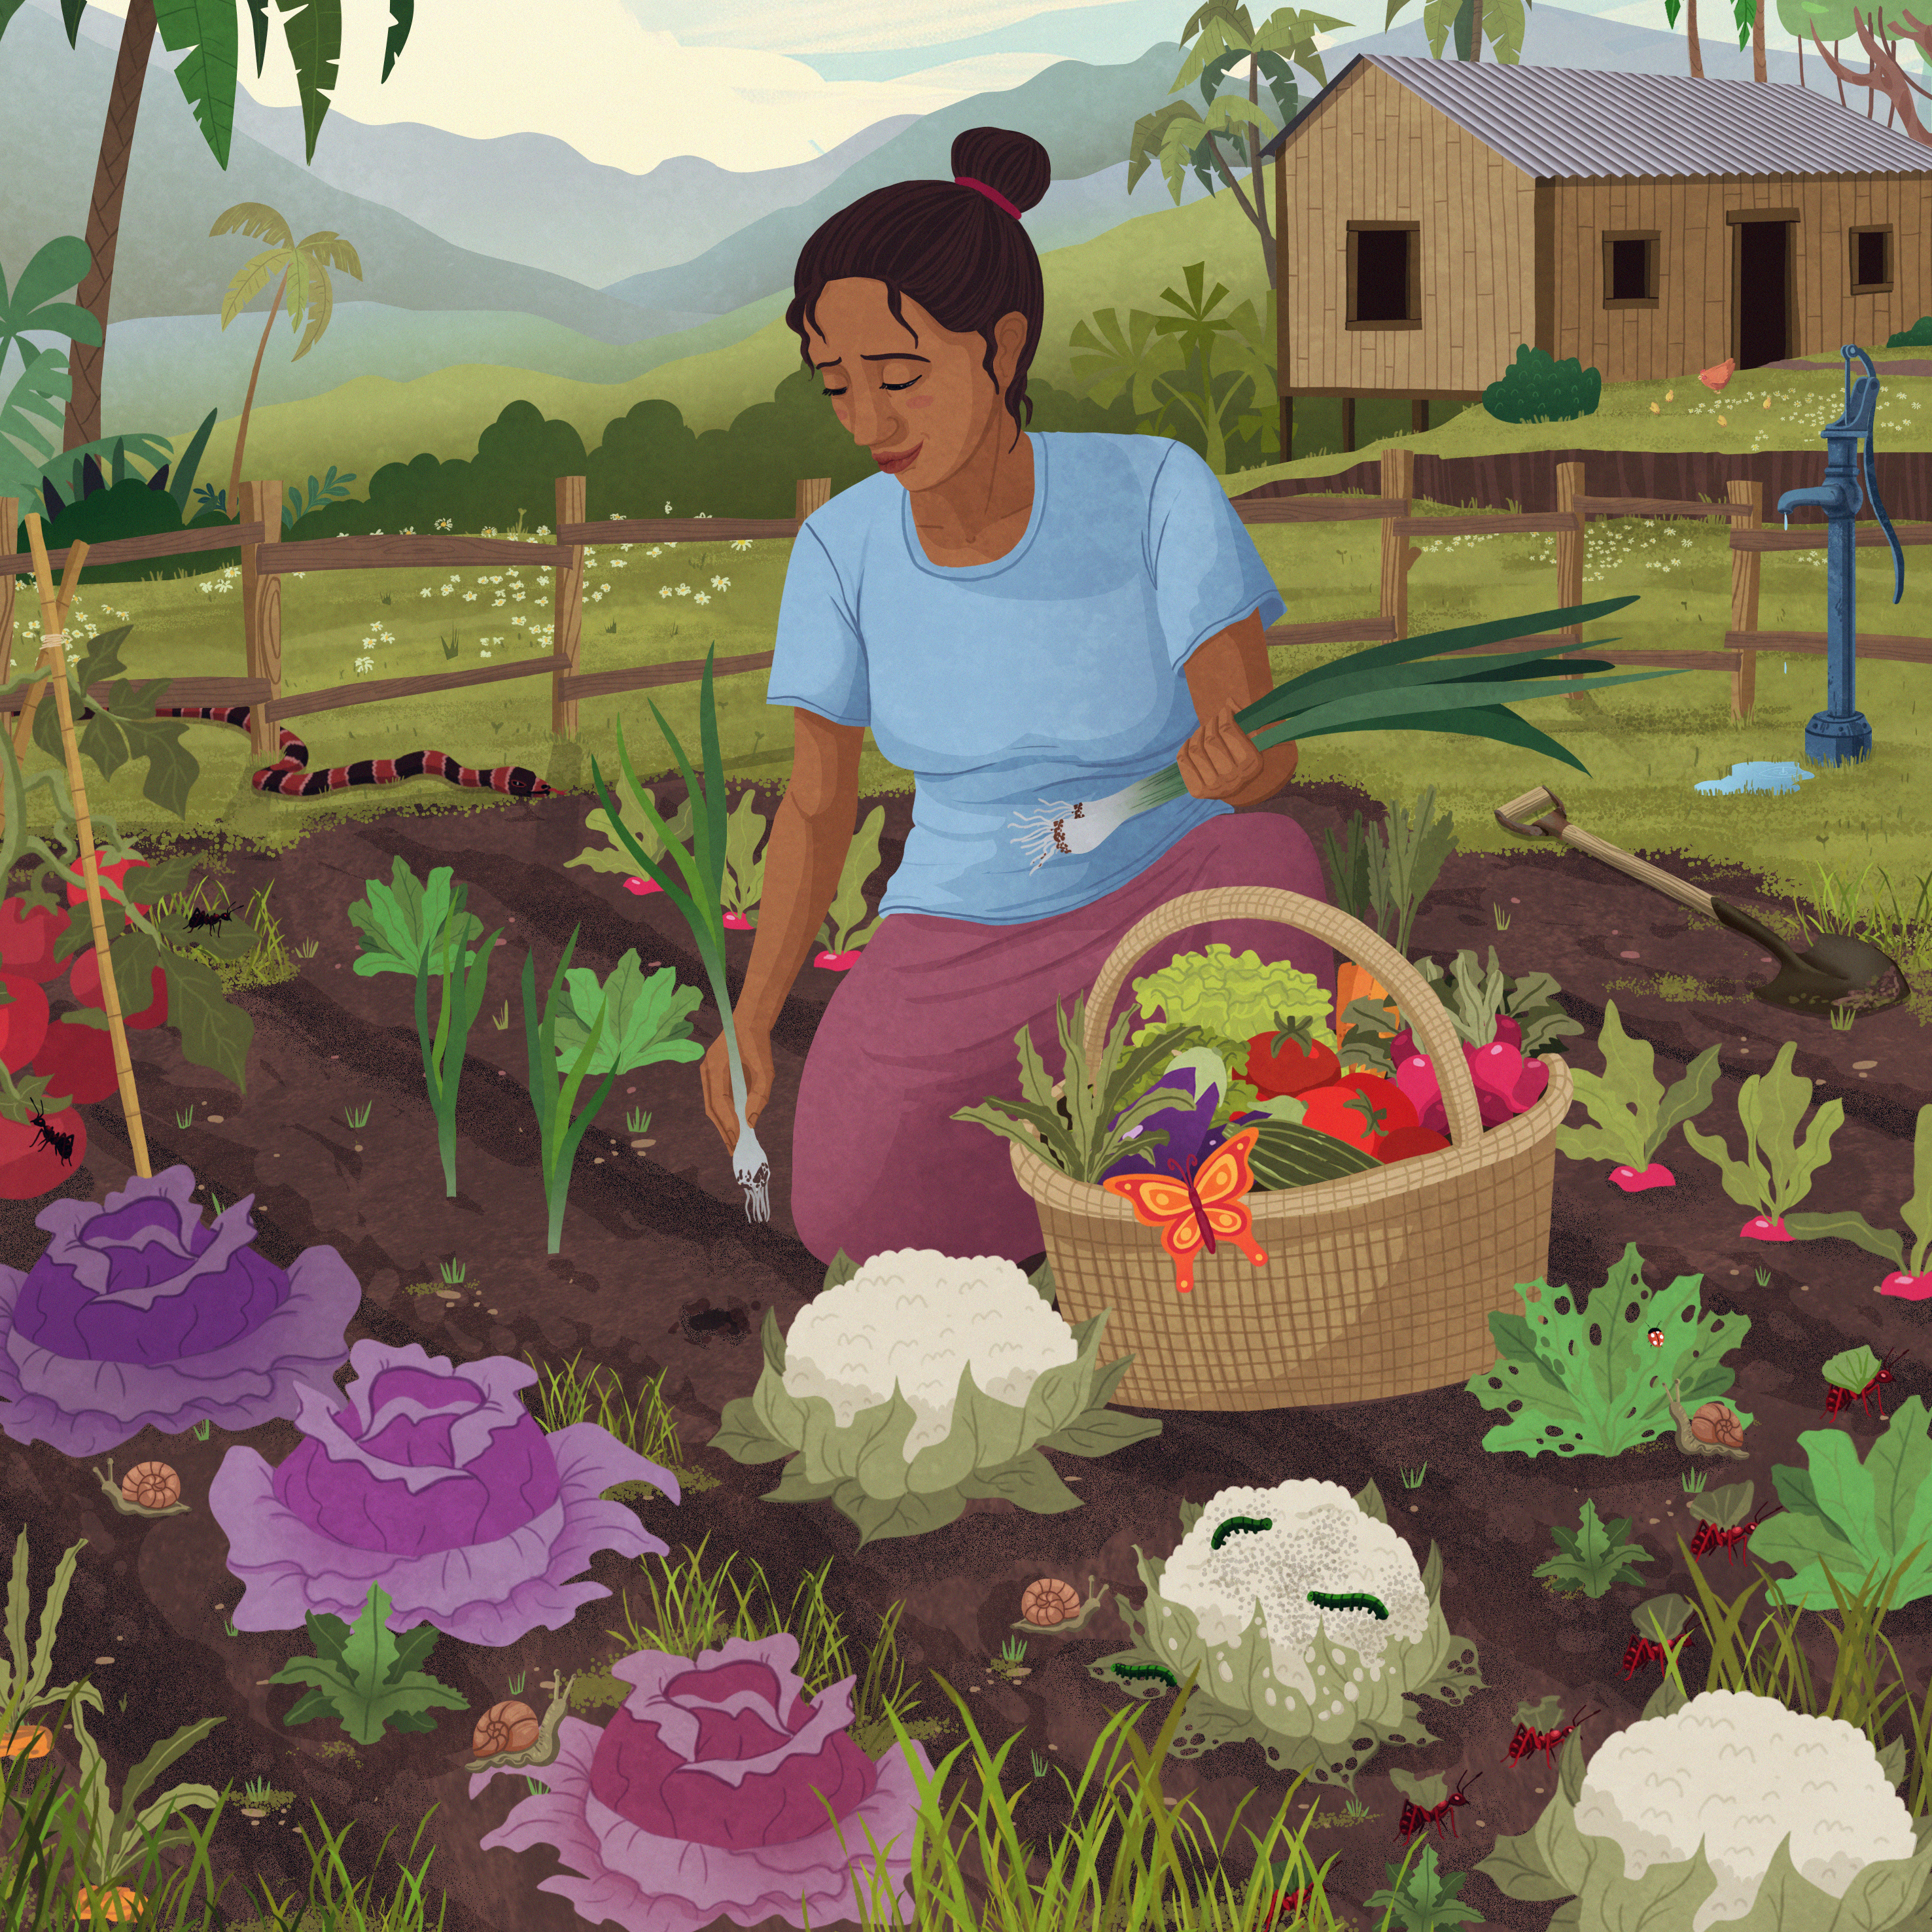 Latin American woman sitting in garden, gathering vegetables